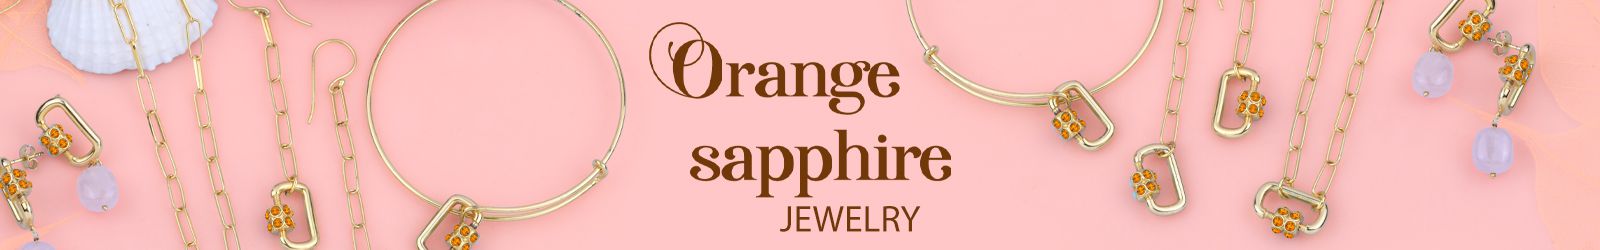 Silver Orange Sapphire Jewelry Wholesale Supplier